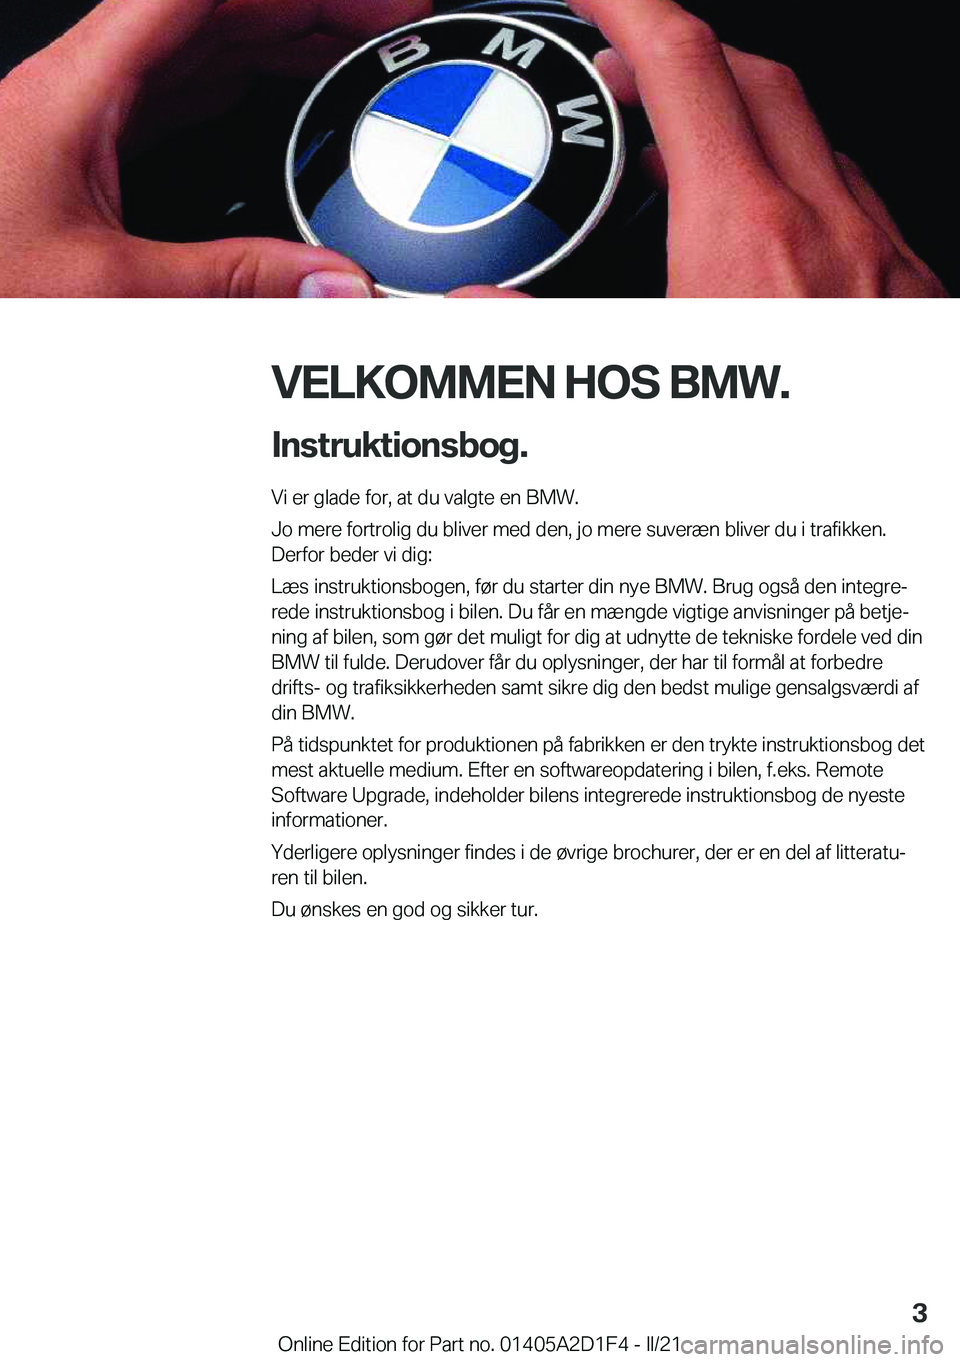 BMW X6 M 2021  InstruktionsbØger (in Danish) �V�E�L�K�O�M�M�E�N��H�O�S��B�M�W�.
�I�n�s�t�r�u�k�t�i�o�n�s�b�o�g�. �V�i��e�r��g�l�a�d�e��f�o�r�,��a�t��d�u��v�a�l�g�t�e��e�n��B�M�W�.
�J�o��m�e�r�e��f�o�r�t�r�o�l�i�g��d�u��b�l�i�v�e�r�